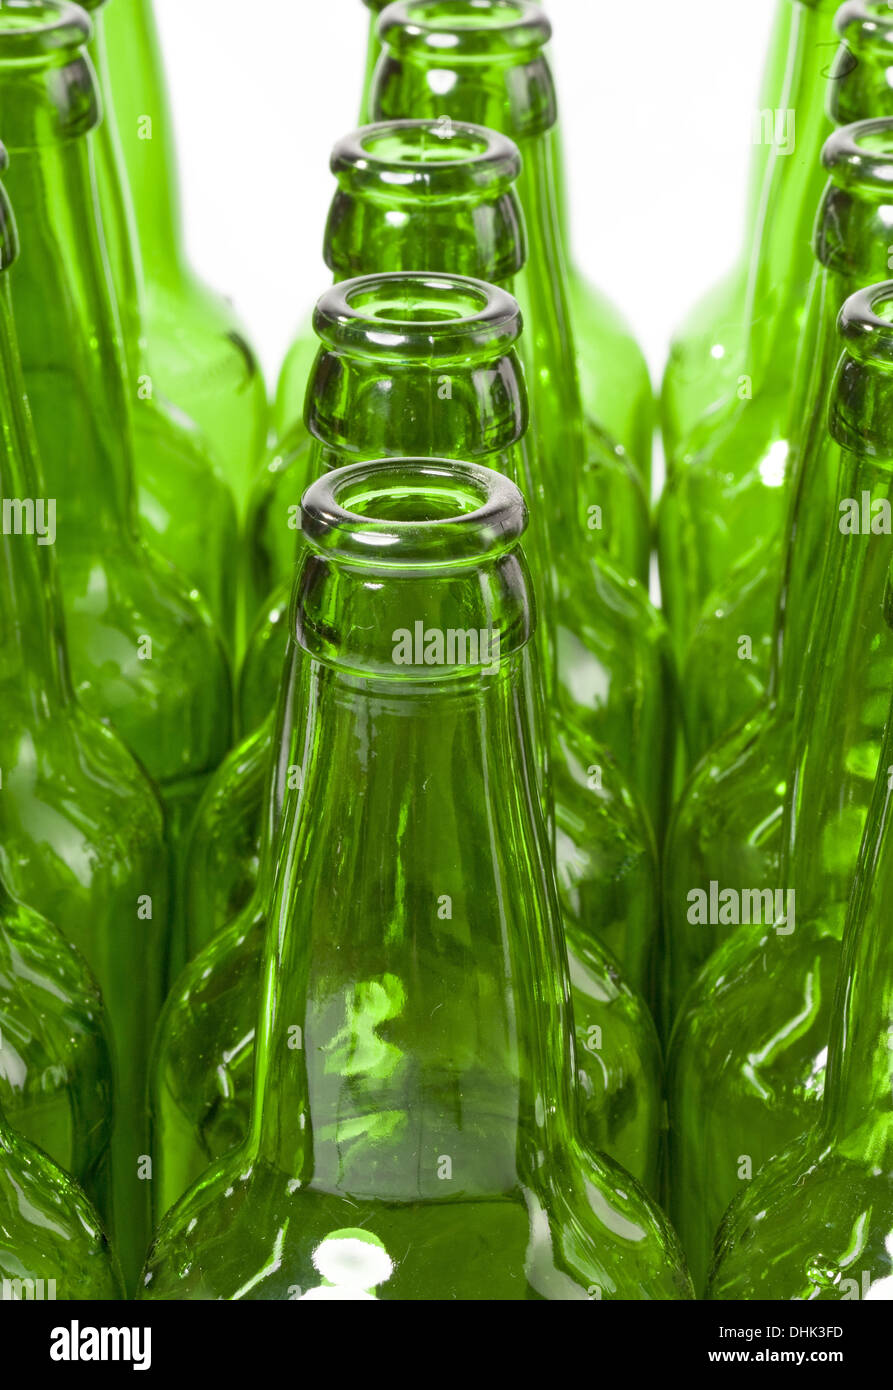 Empty glass bottles Stock Photo